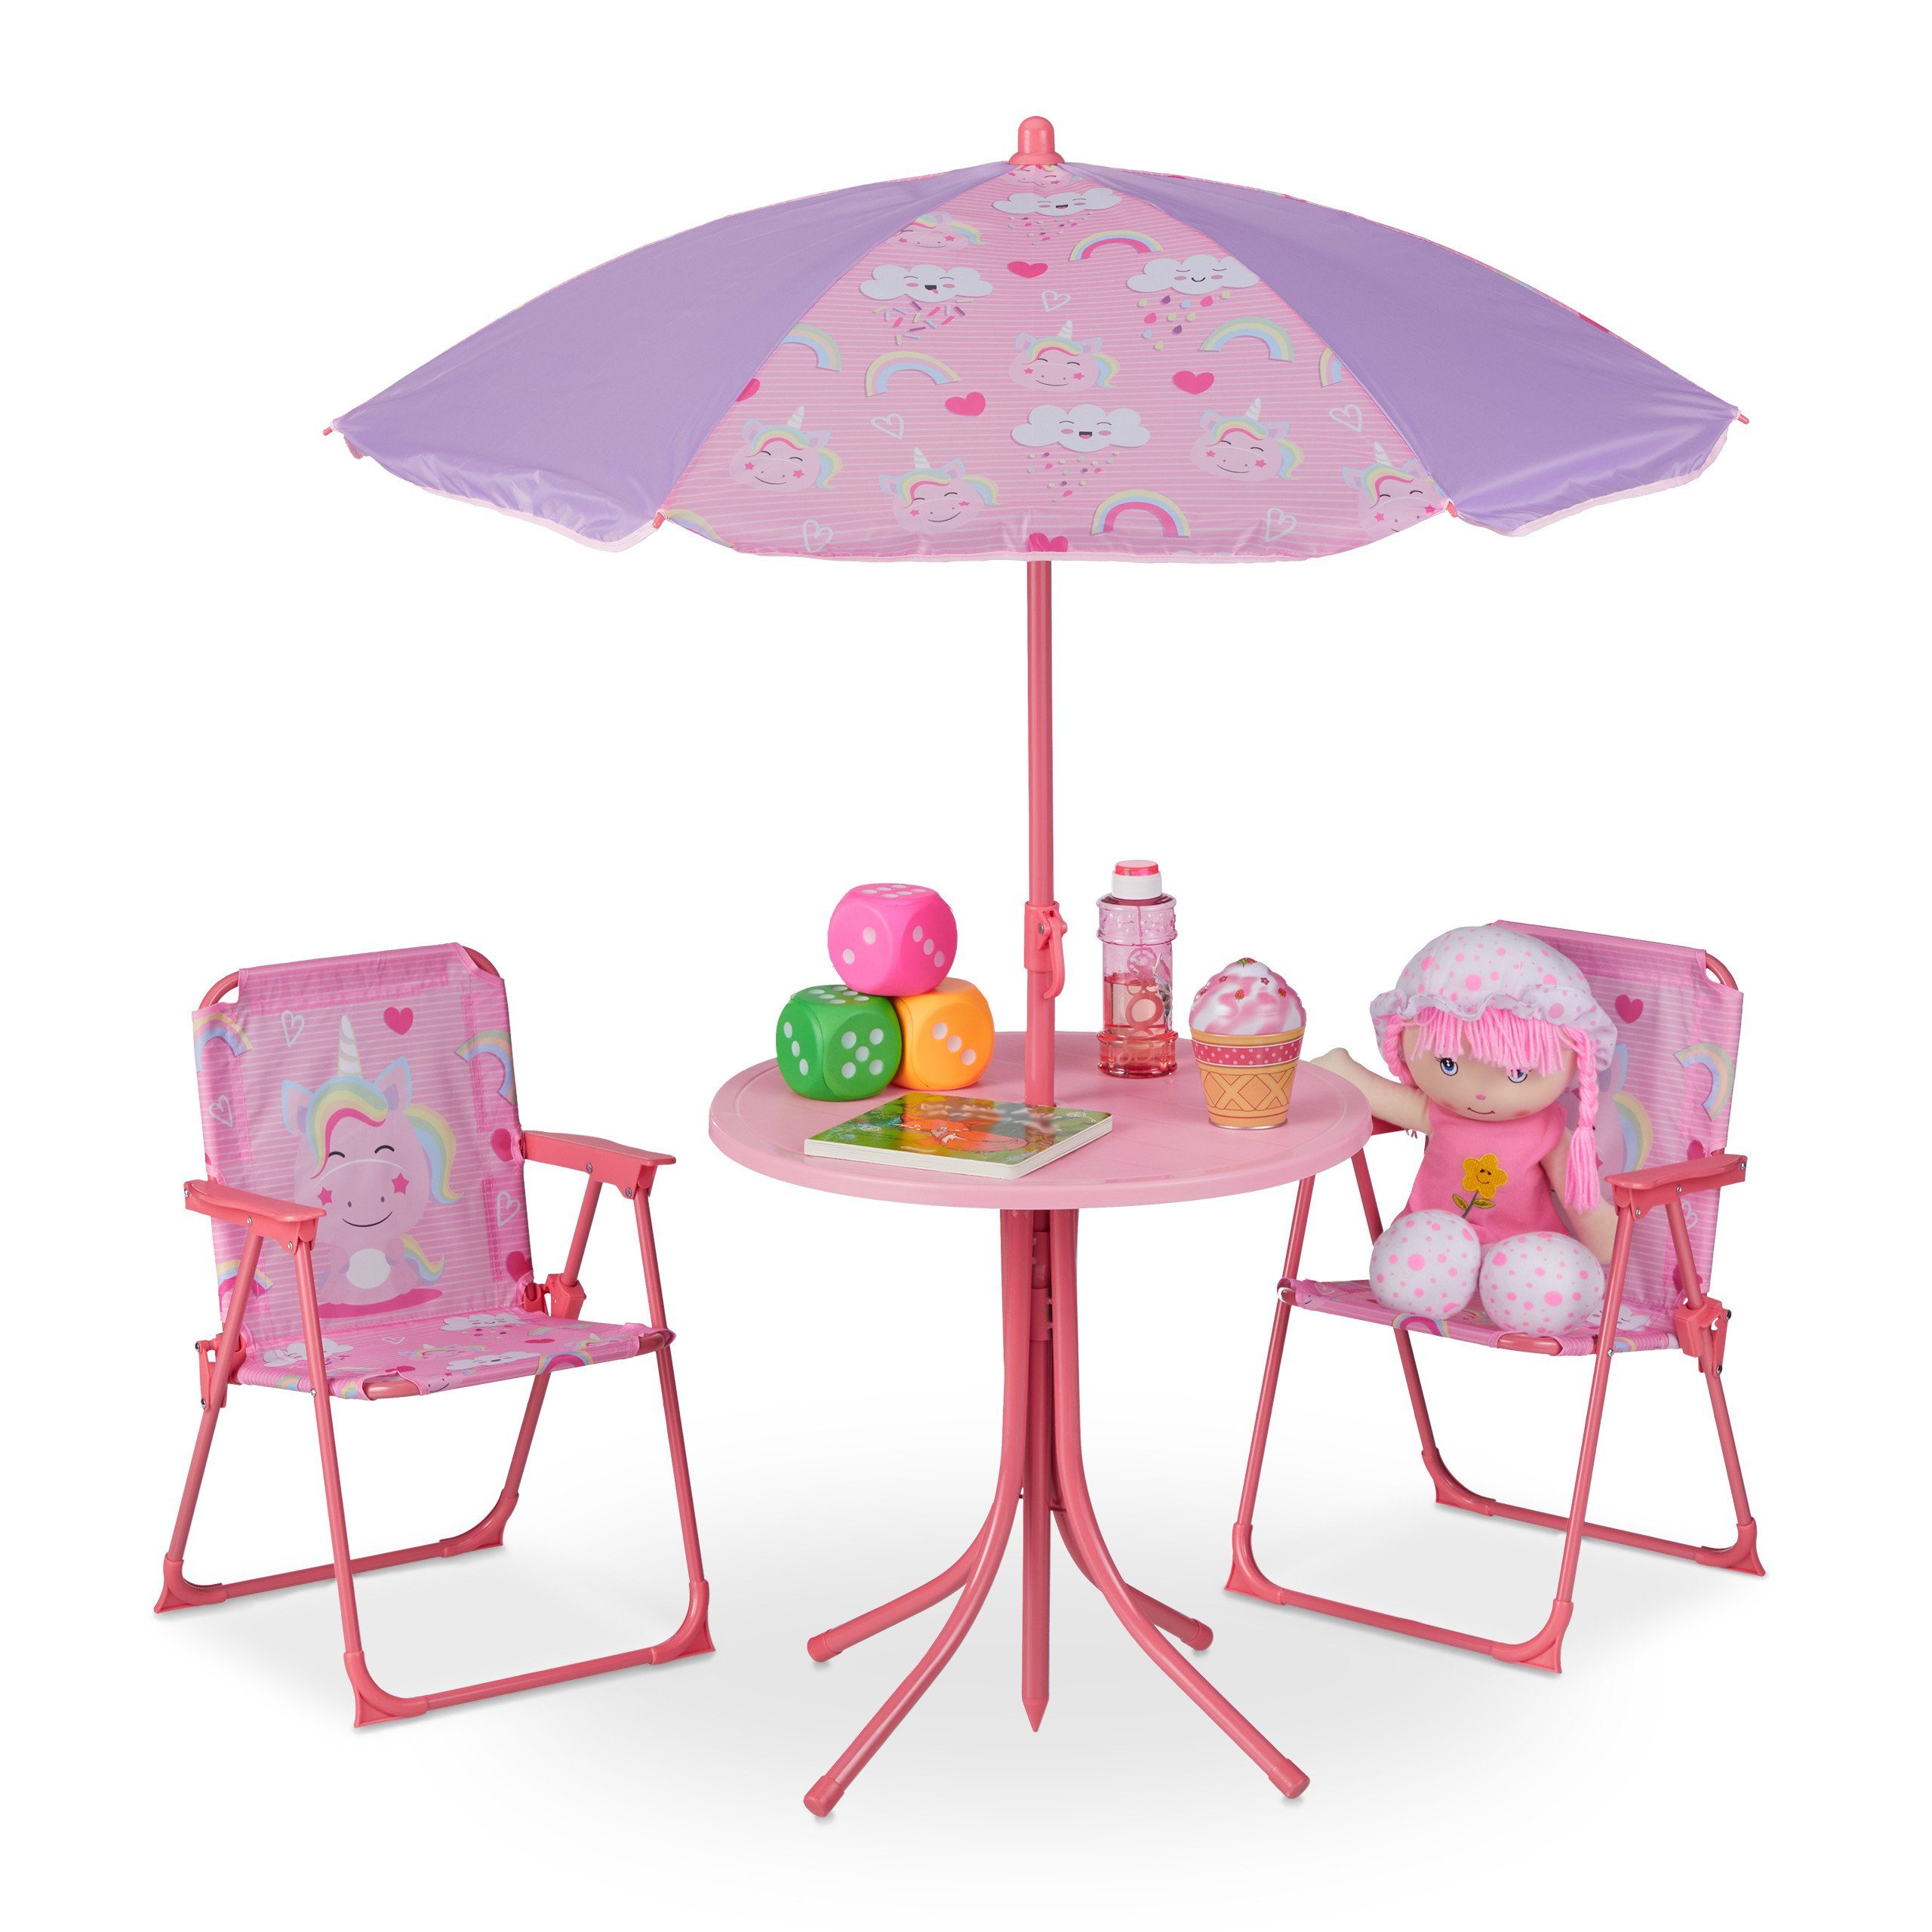 relaxdays Campingstuhl Camping Kindersitzgruppe mit Schirm, Unicorn Pink